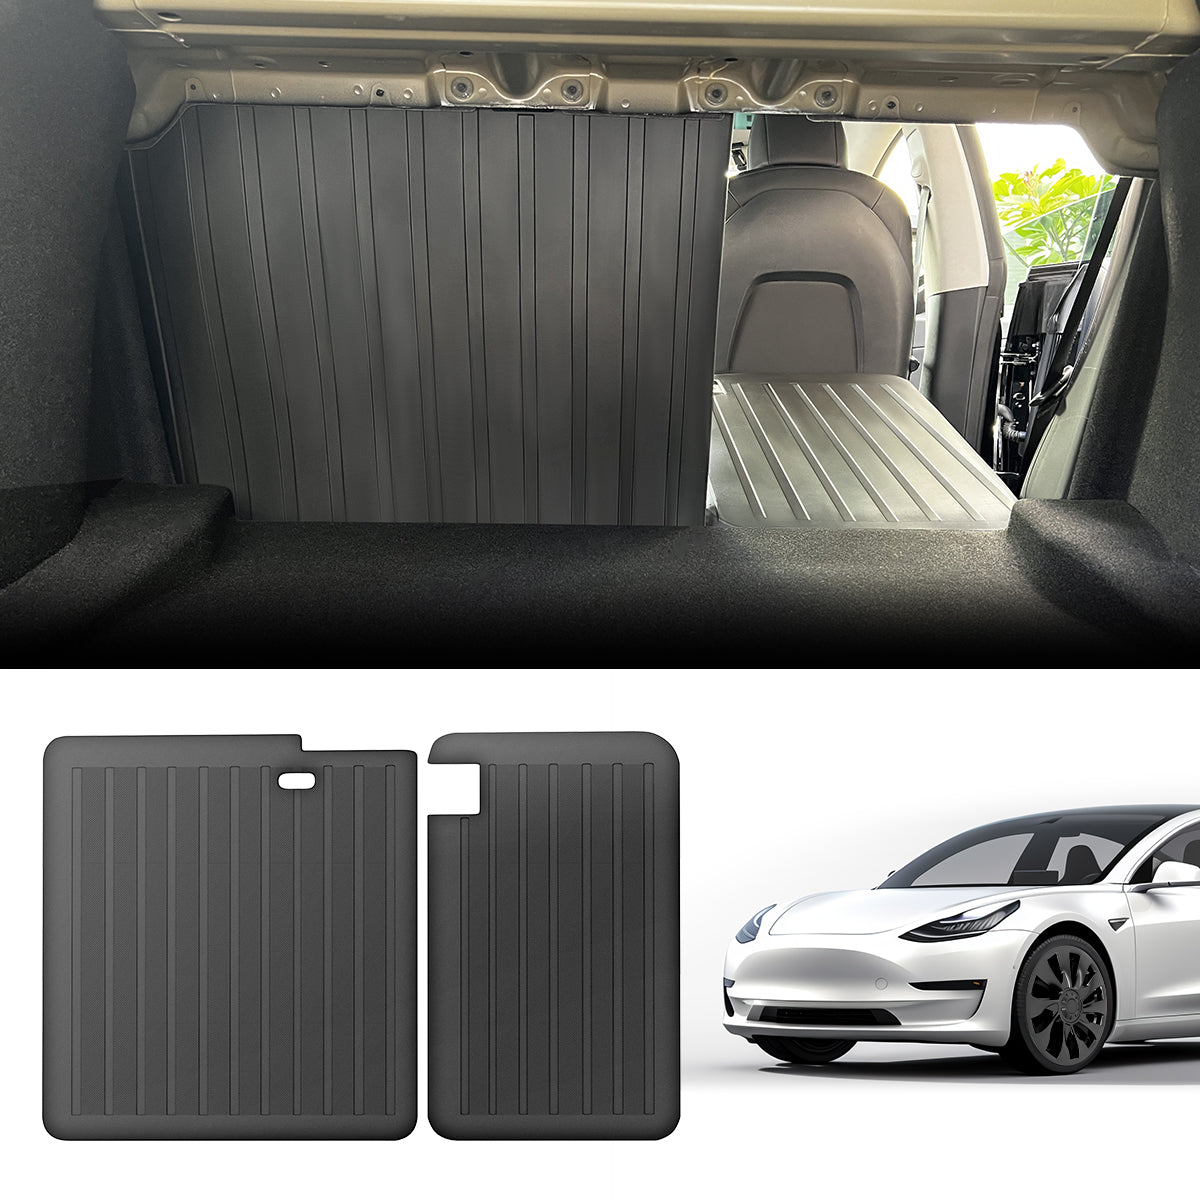 Tesla Model 3 Second Row Seats Back Cover Mats